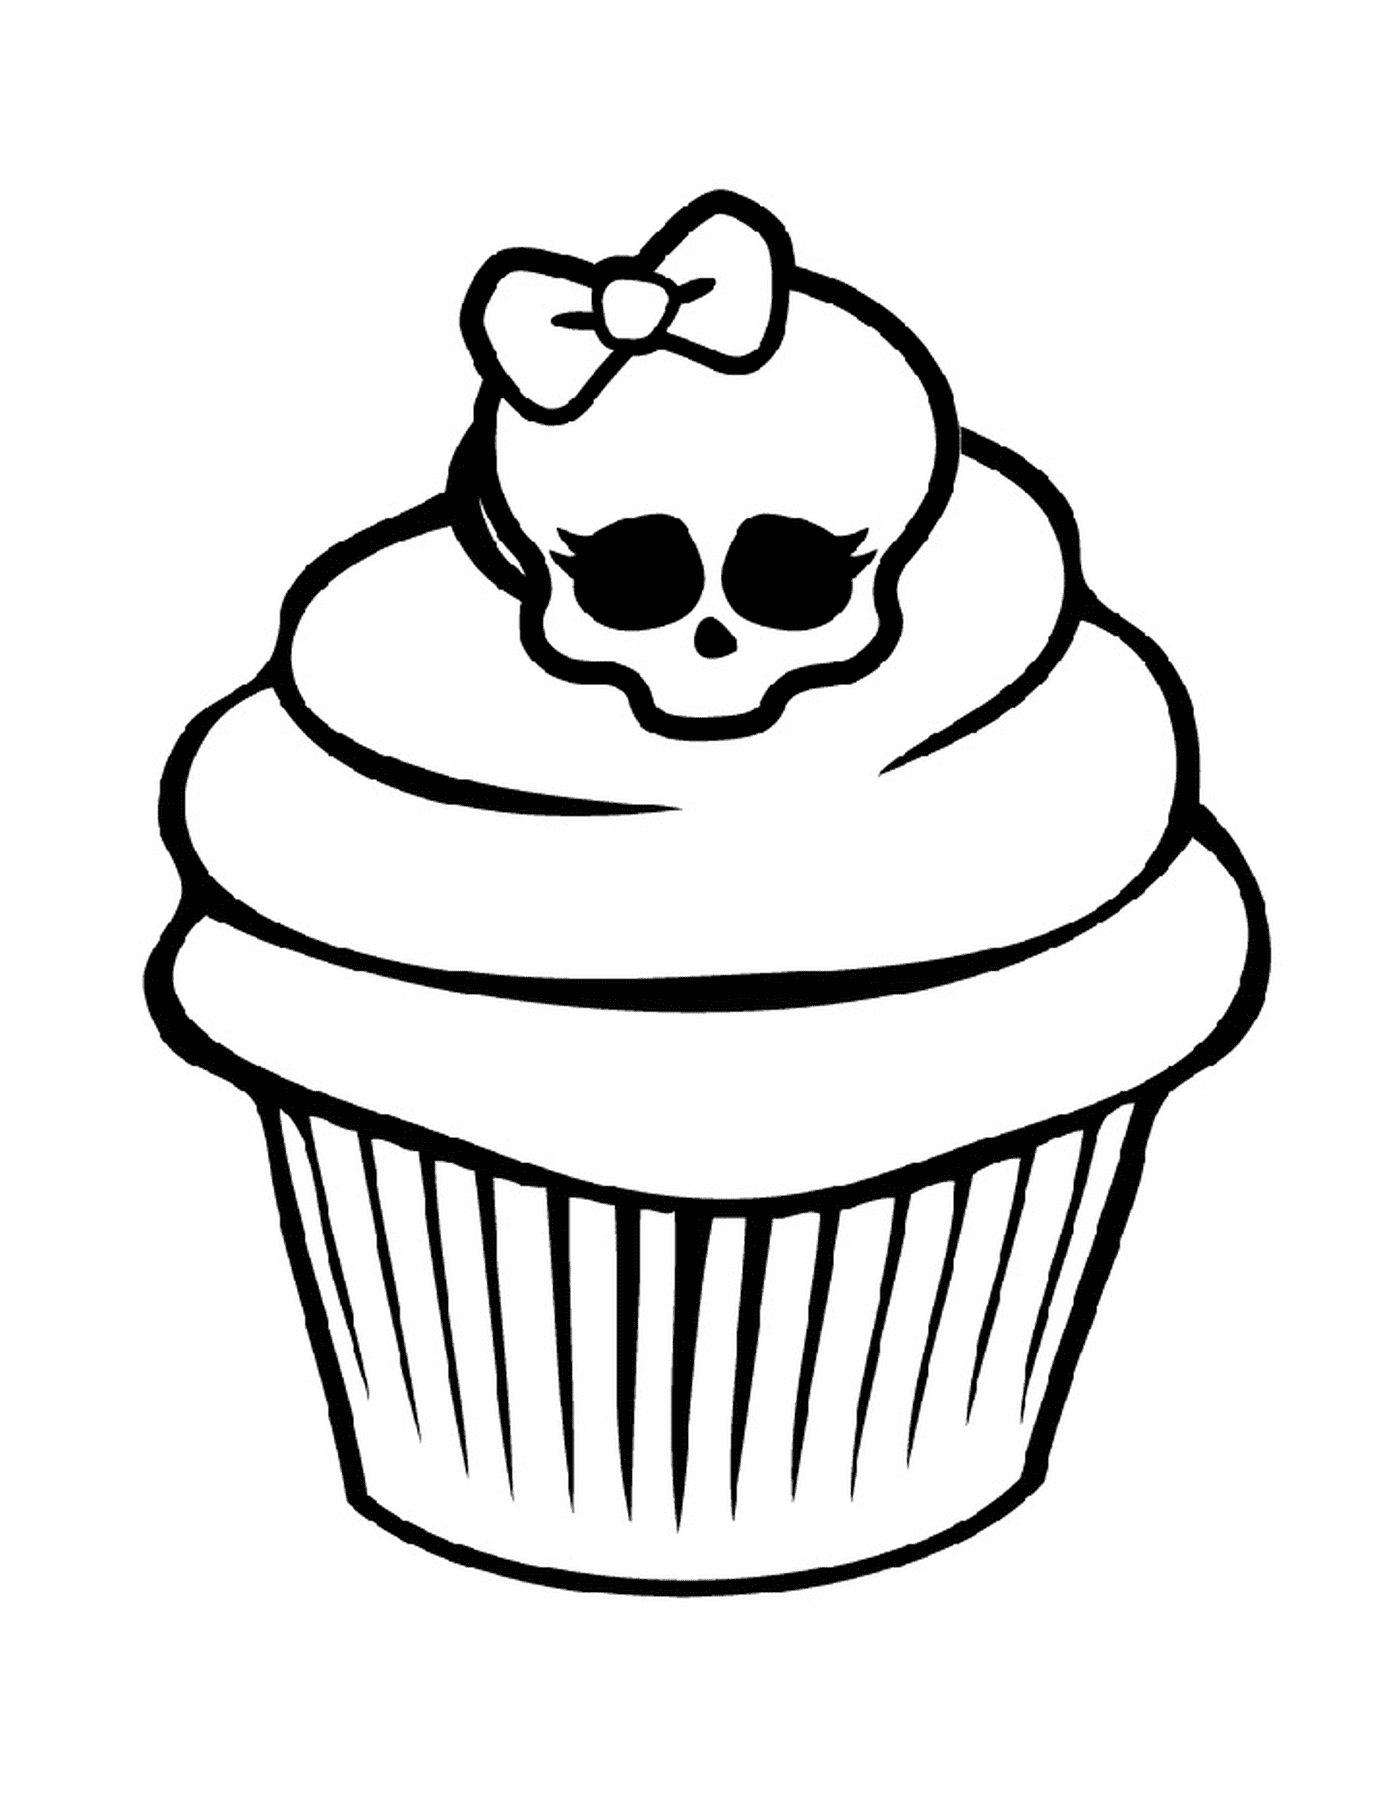  A skull-shaped Monster High cupcake 